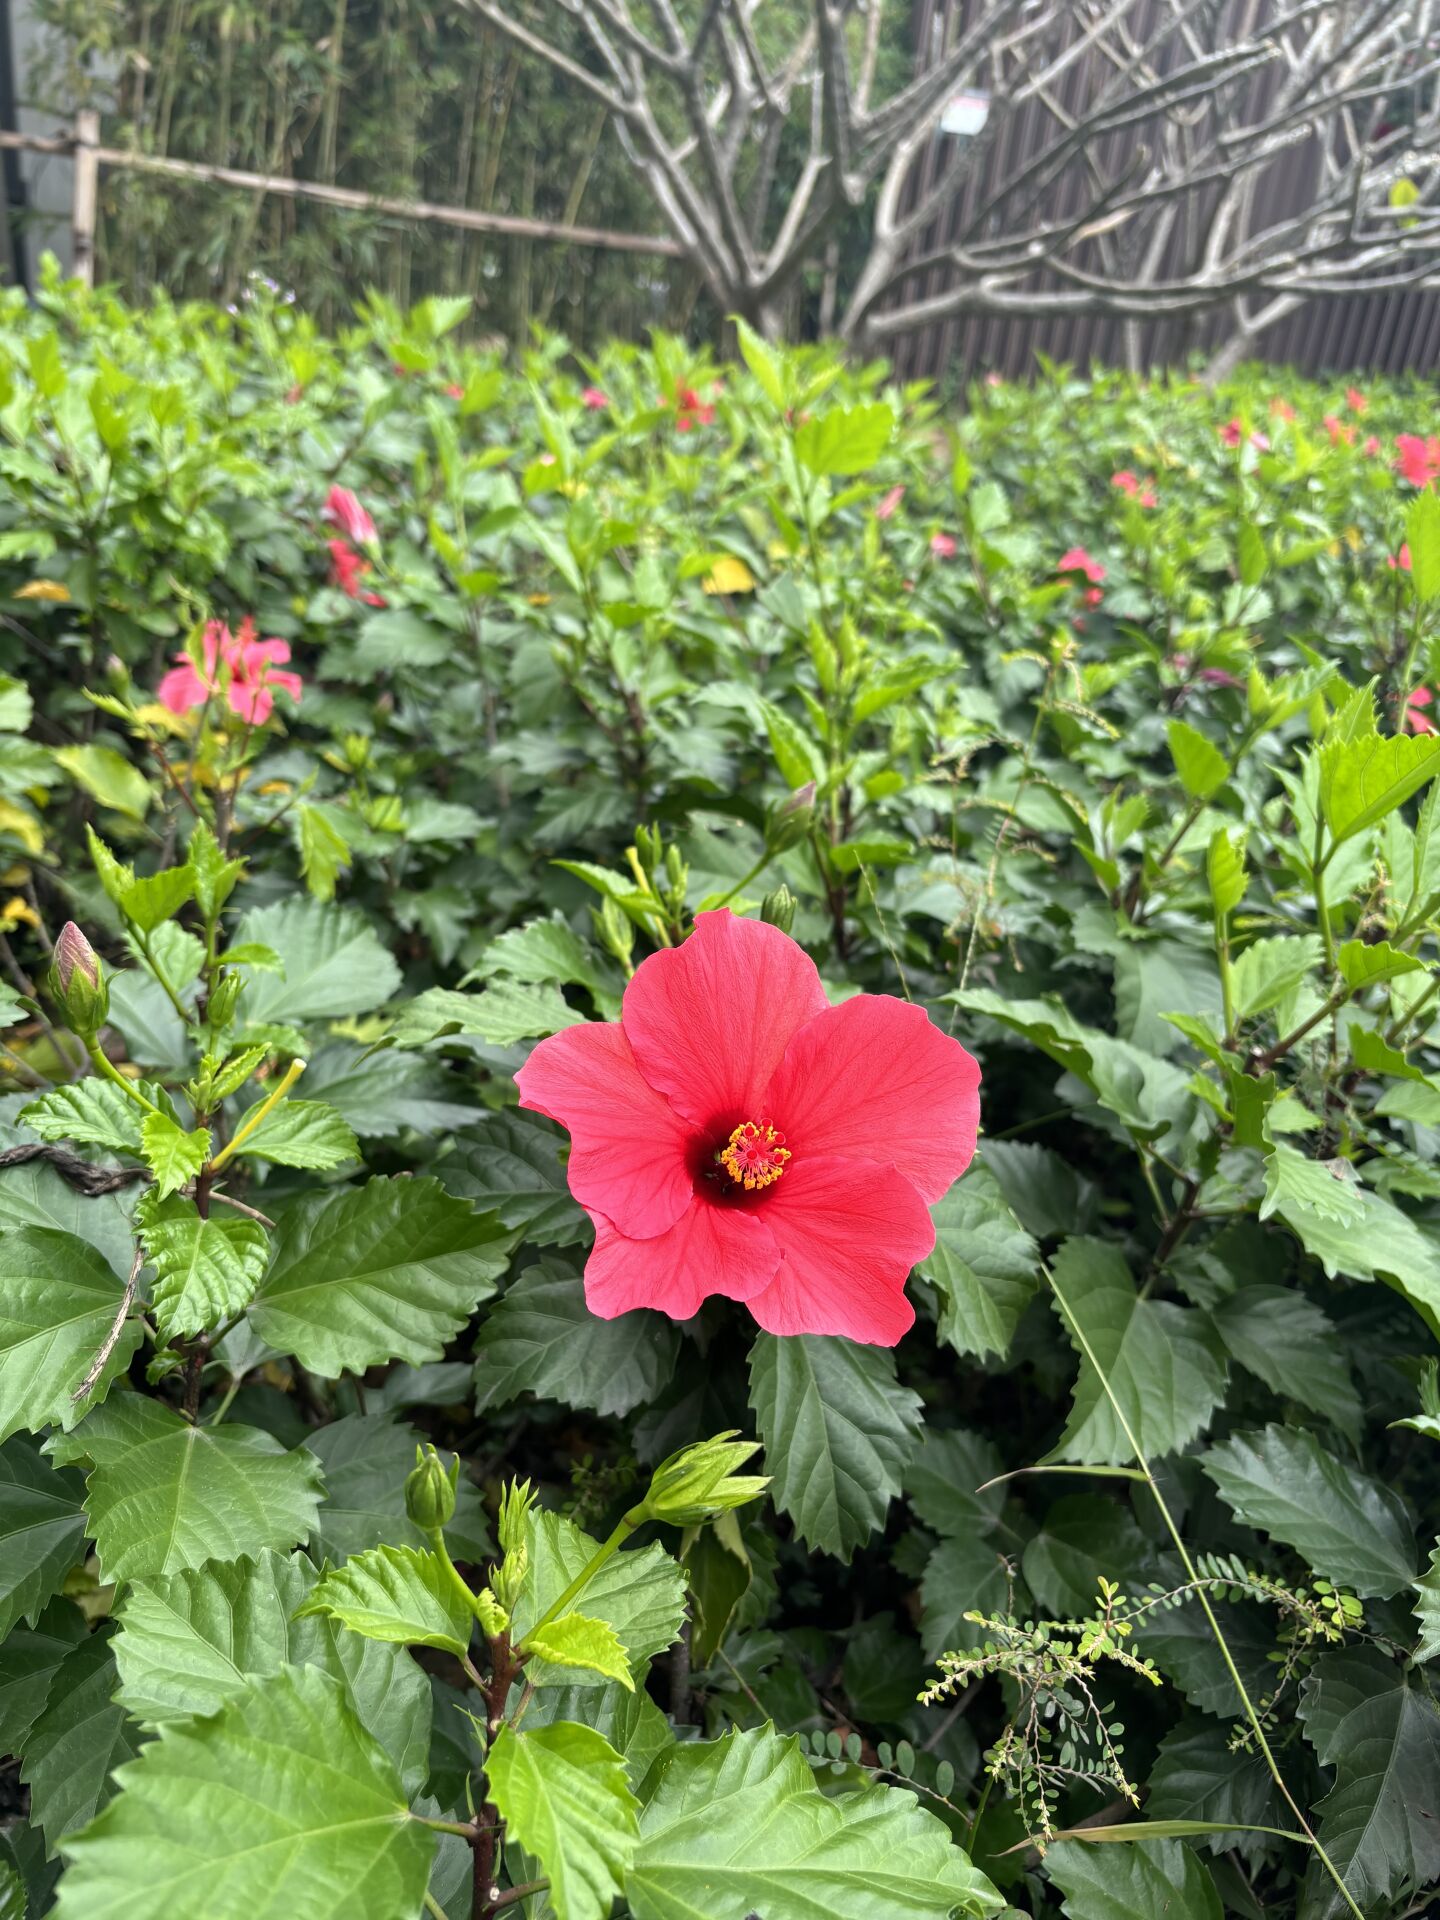 https://www.fa.gov.hk/Hibiscus rosa-sinensis